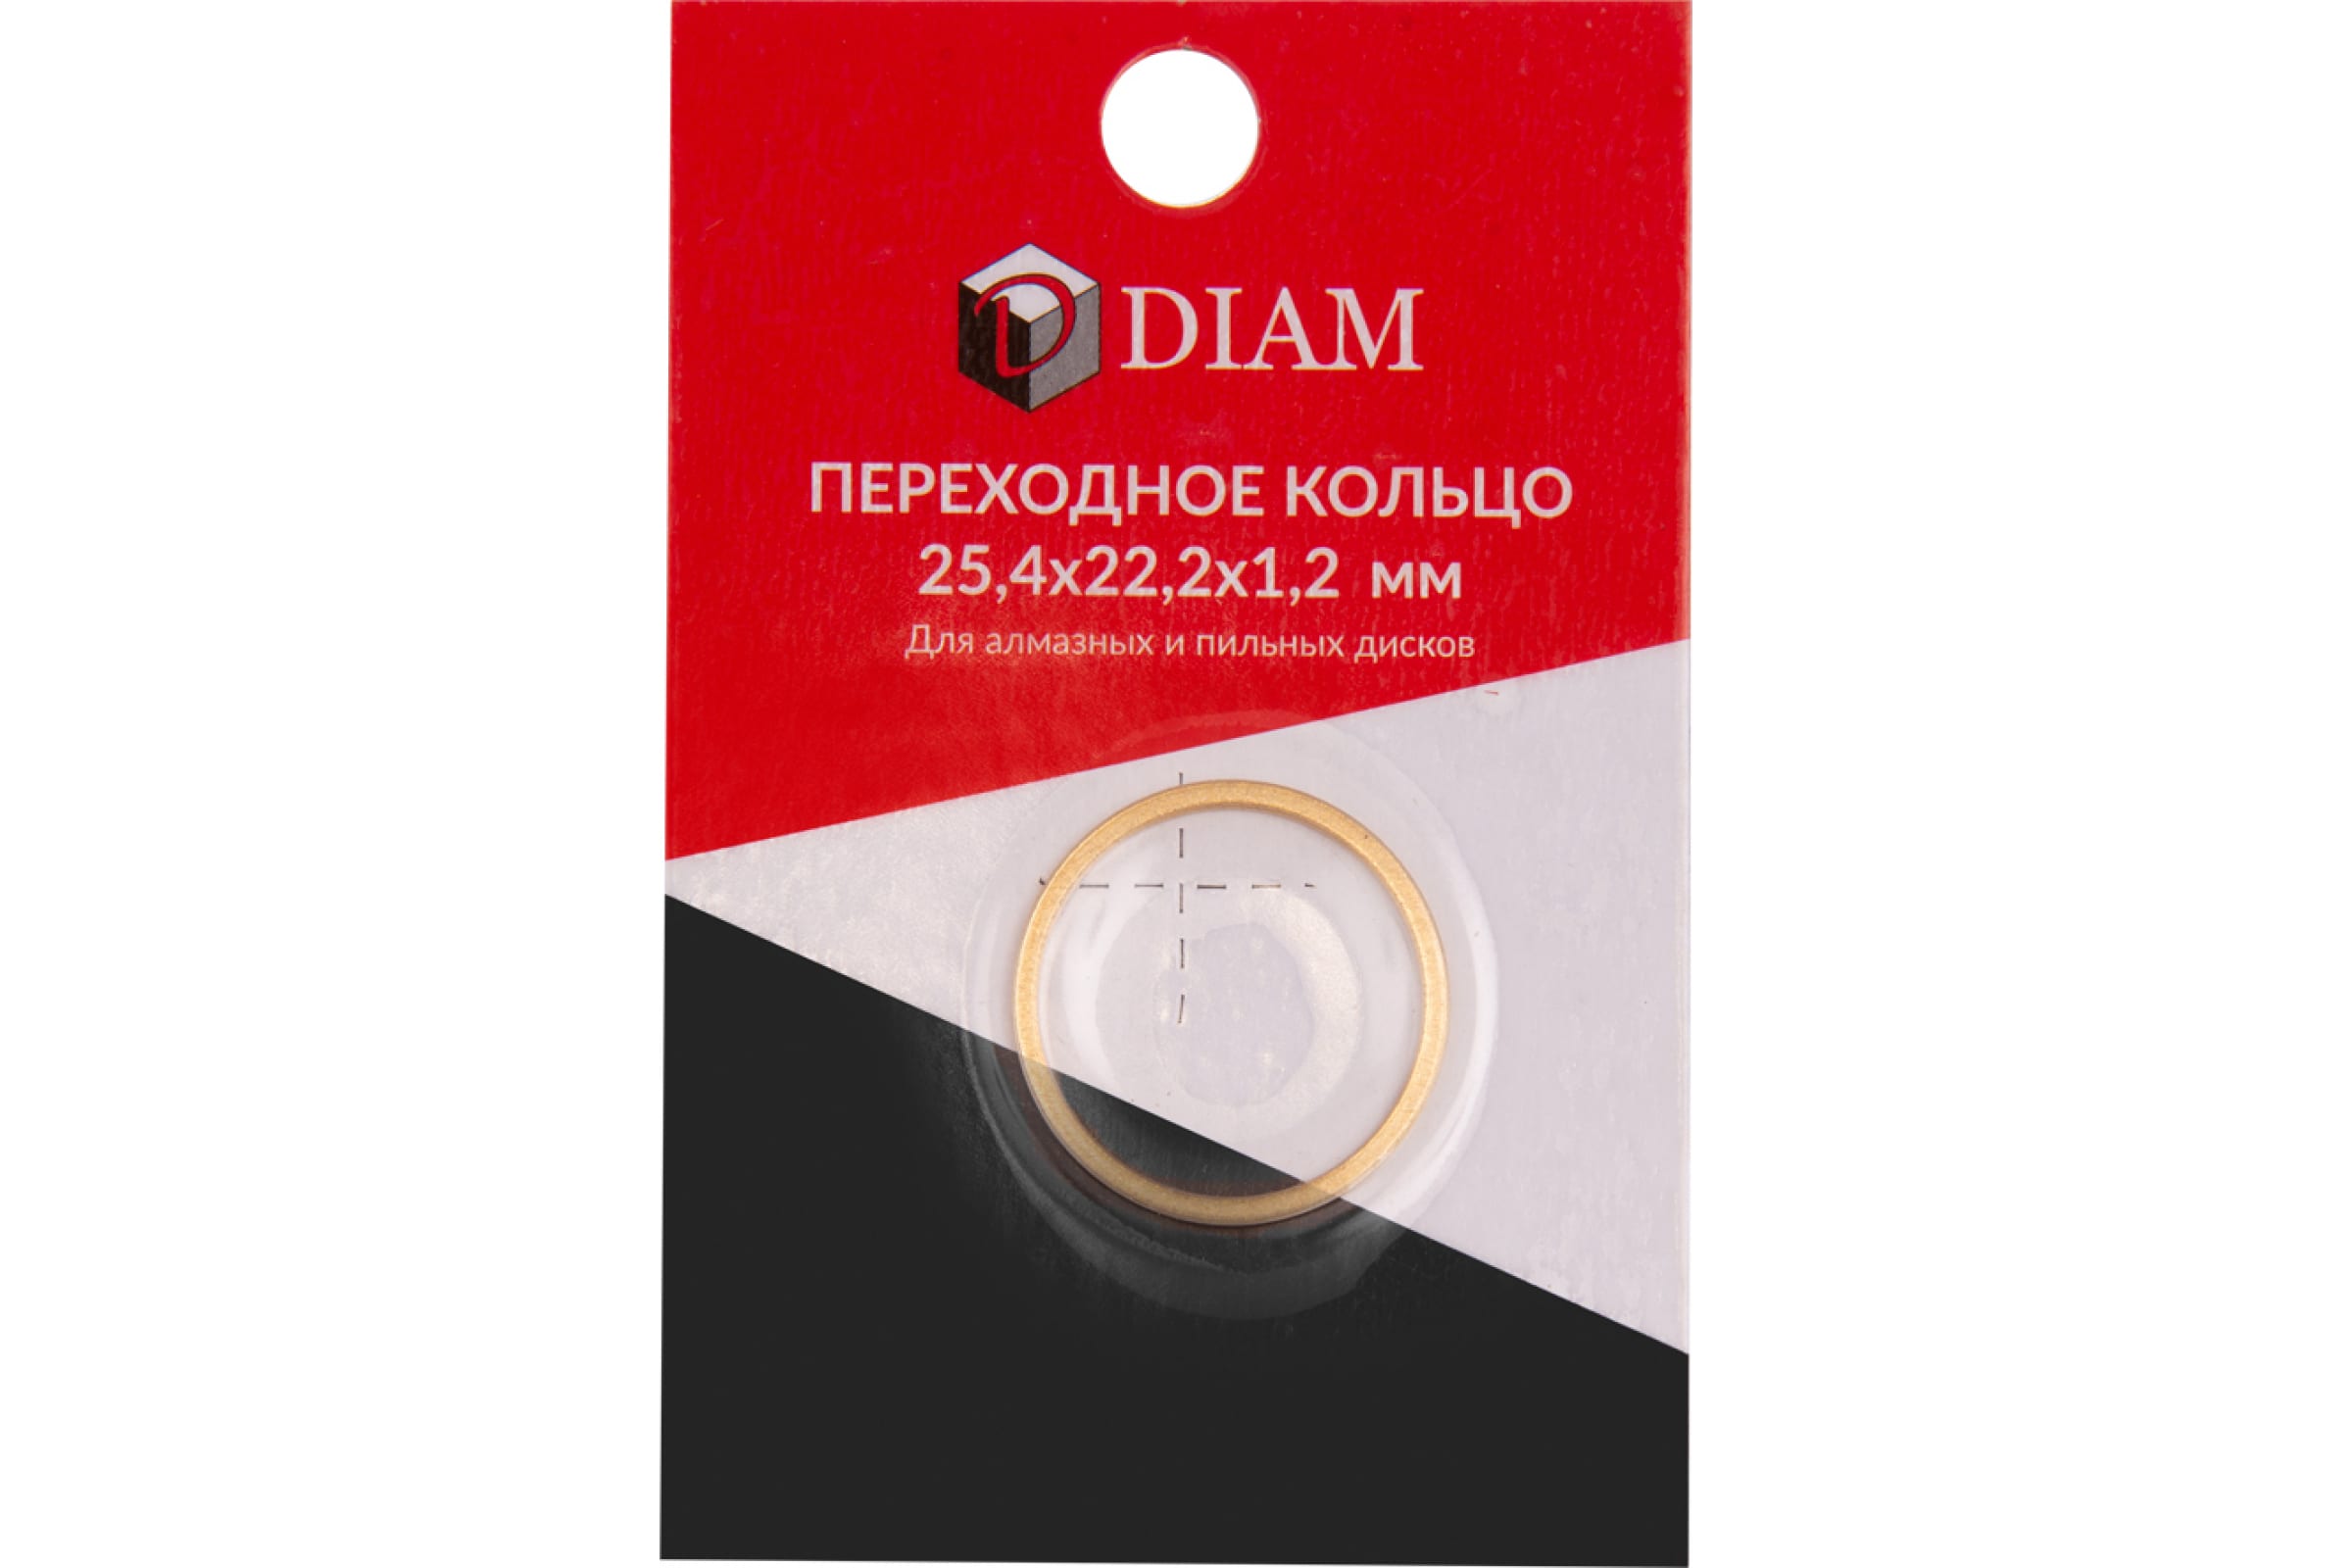 DIAM Переходное кольцо 25,4х22,2х1,2 640084 переходное кольцо diam